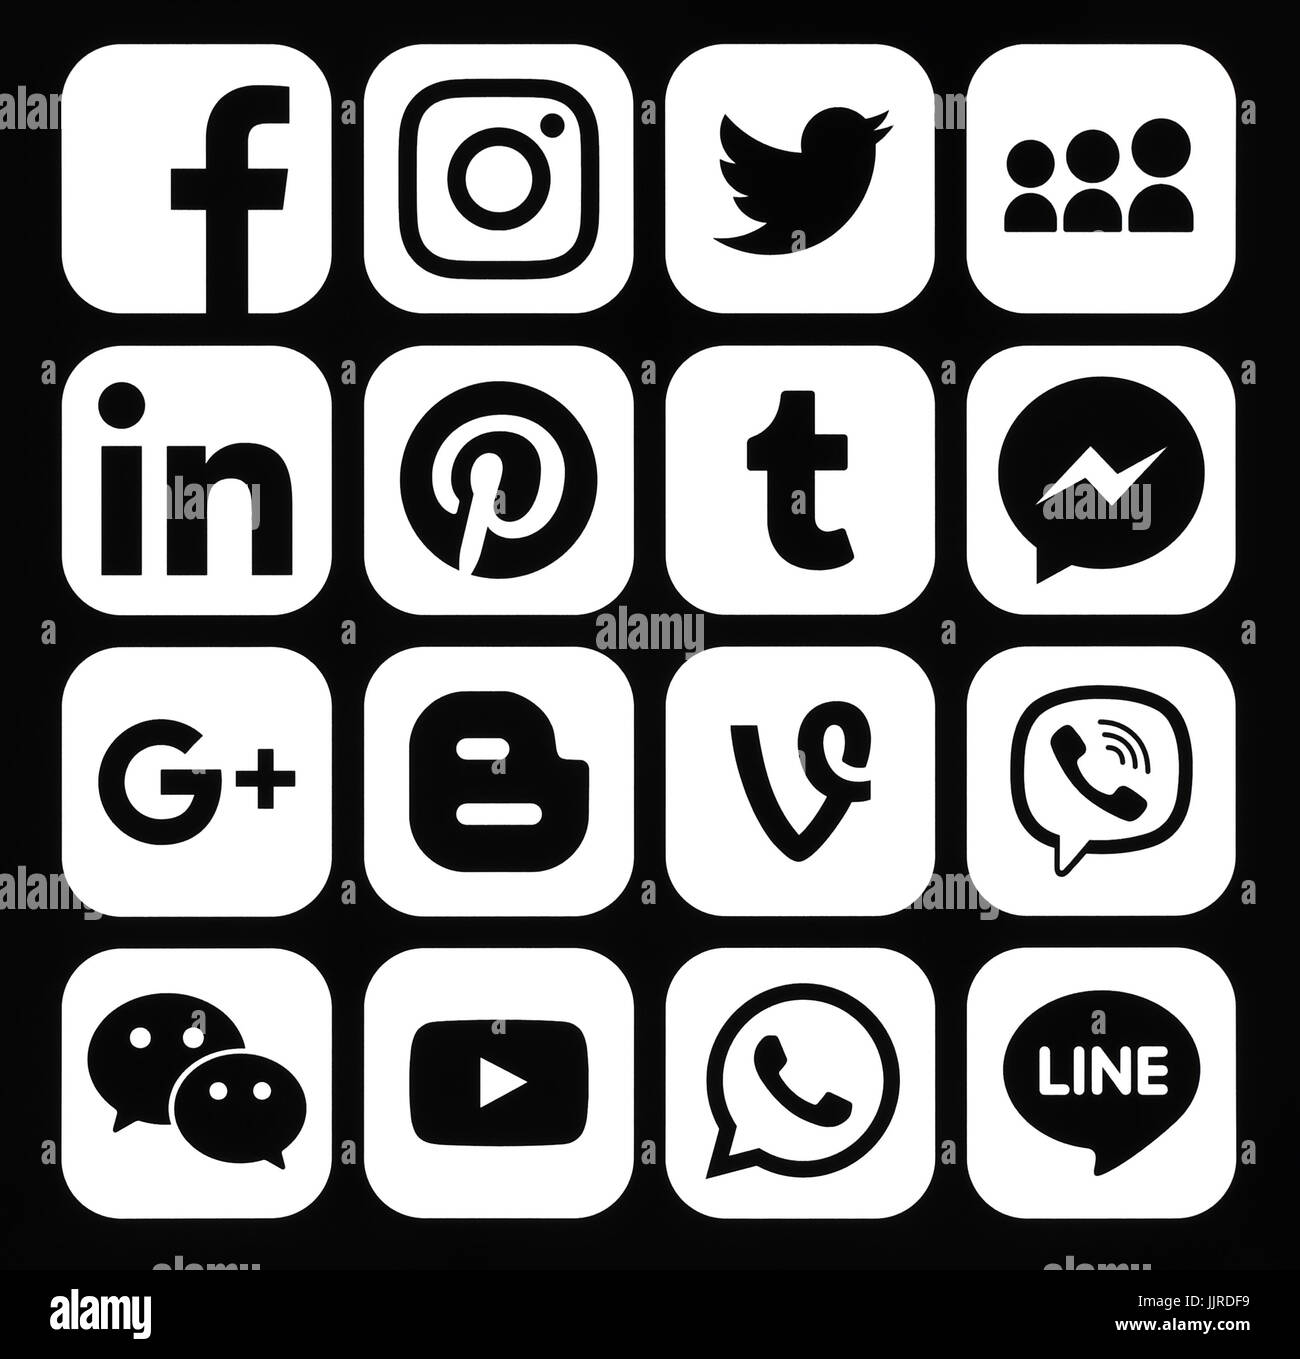 Kiev, Ucraina - 05 dicembre 2016: Raccolta di bianco popolare social media icone stampate su carta nera: Facebook, Twitter, Google Plus, Instagram, P Foto Stock